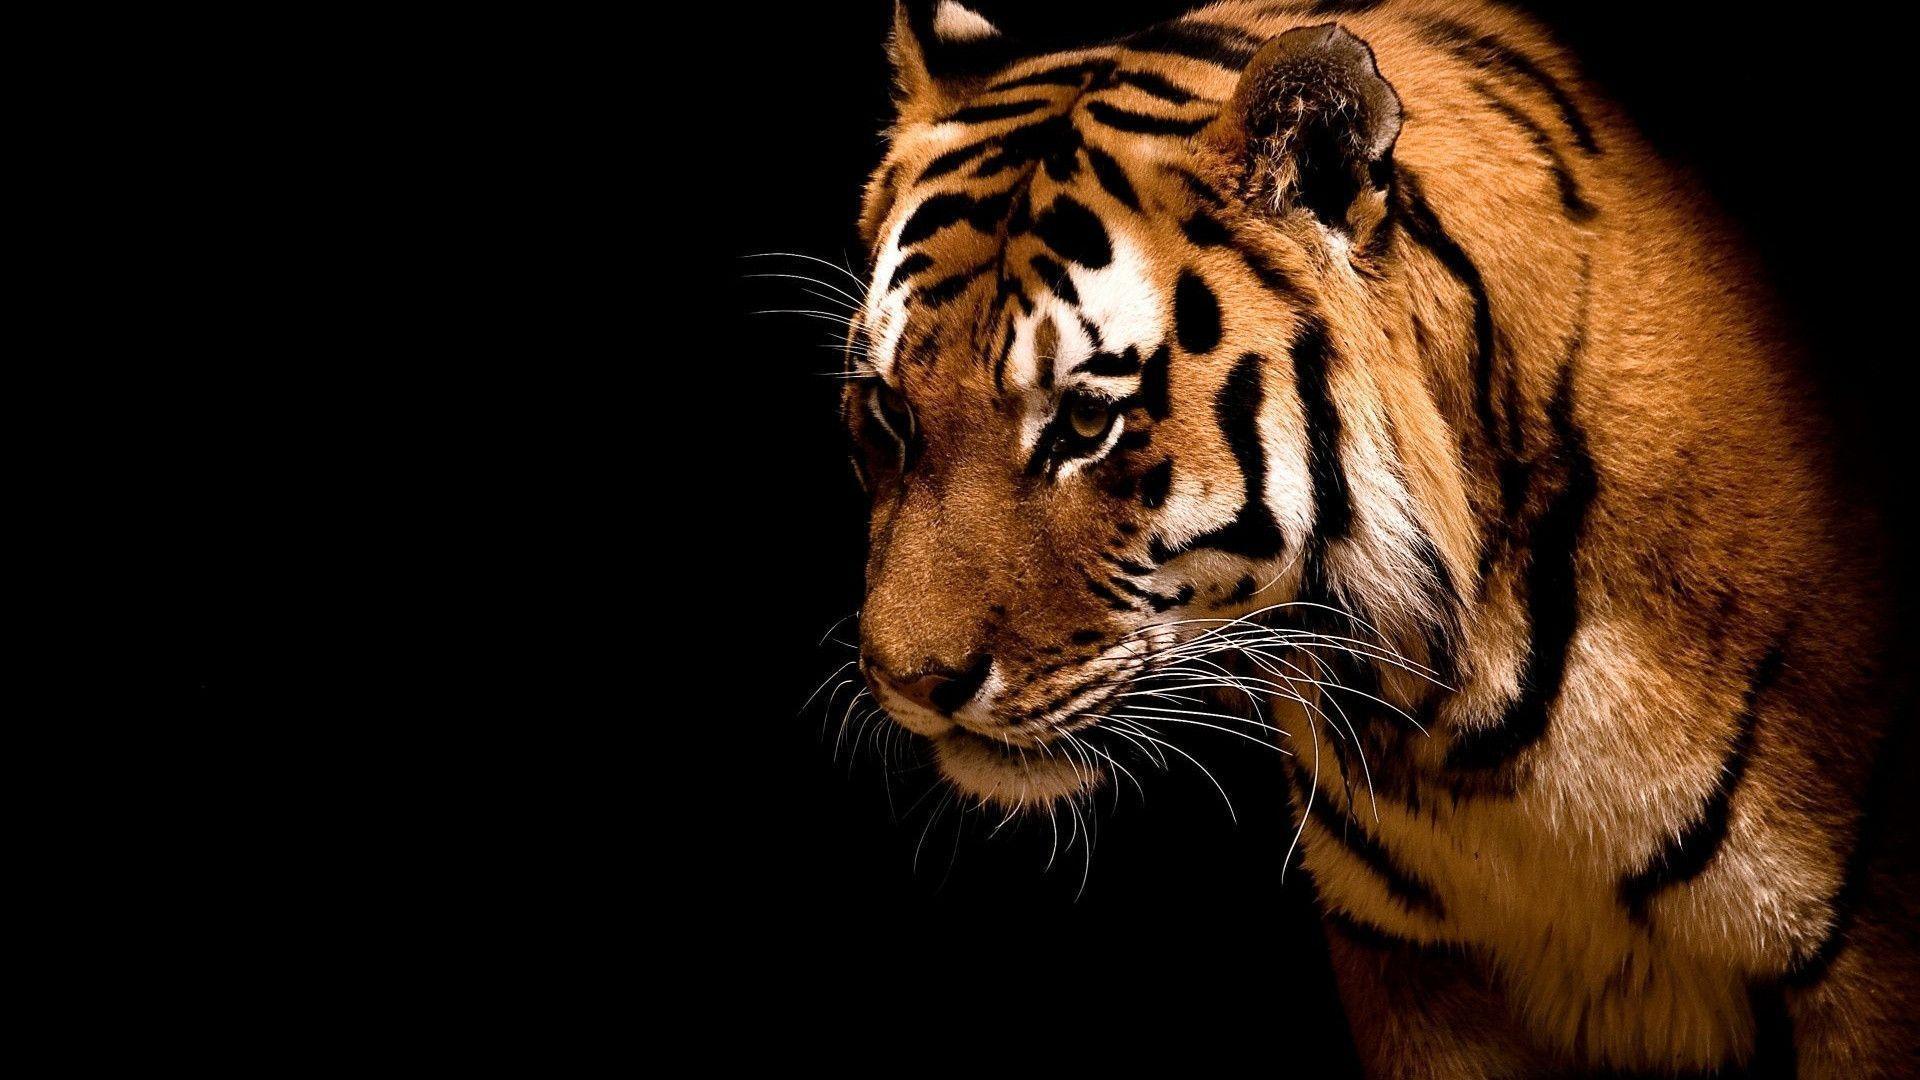 Tiger in the dark desktop PC and Mac wallpaper